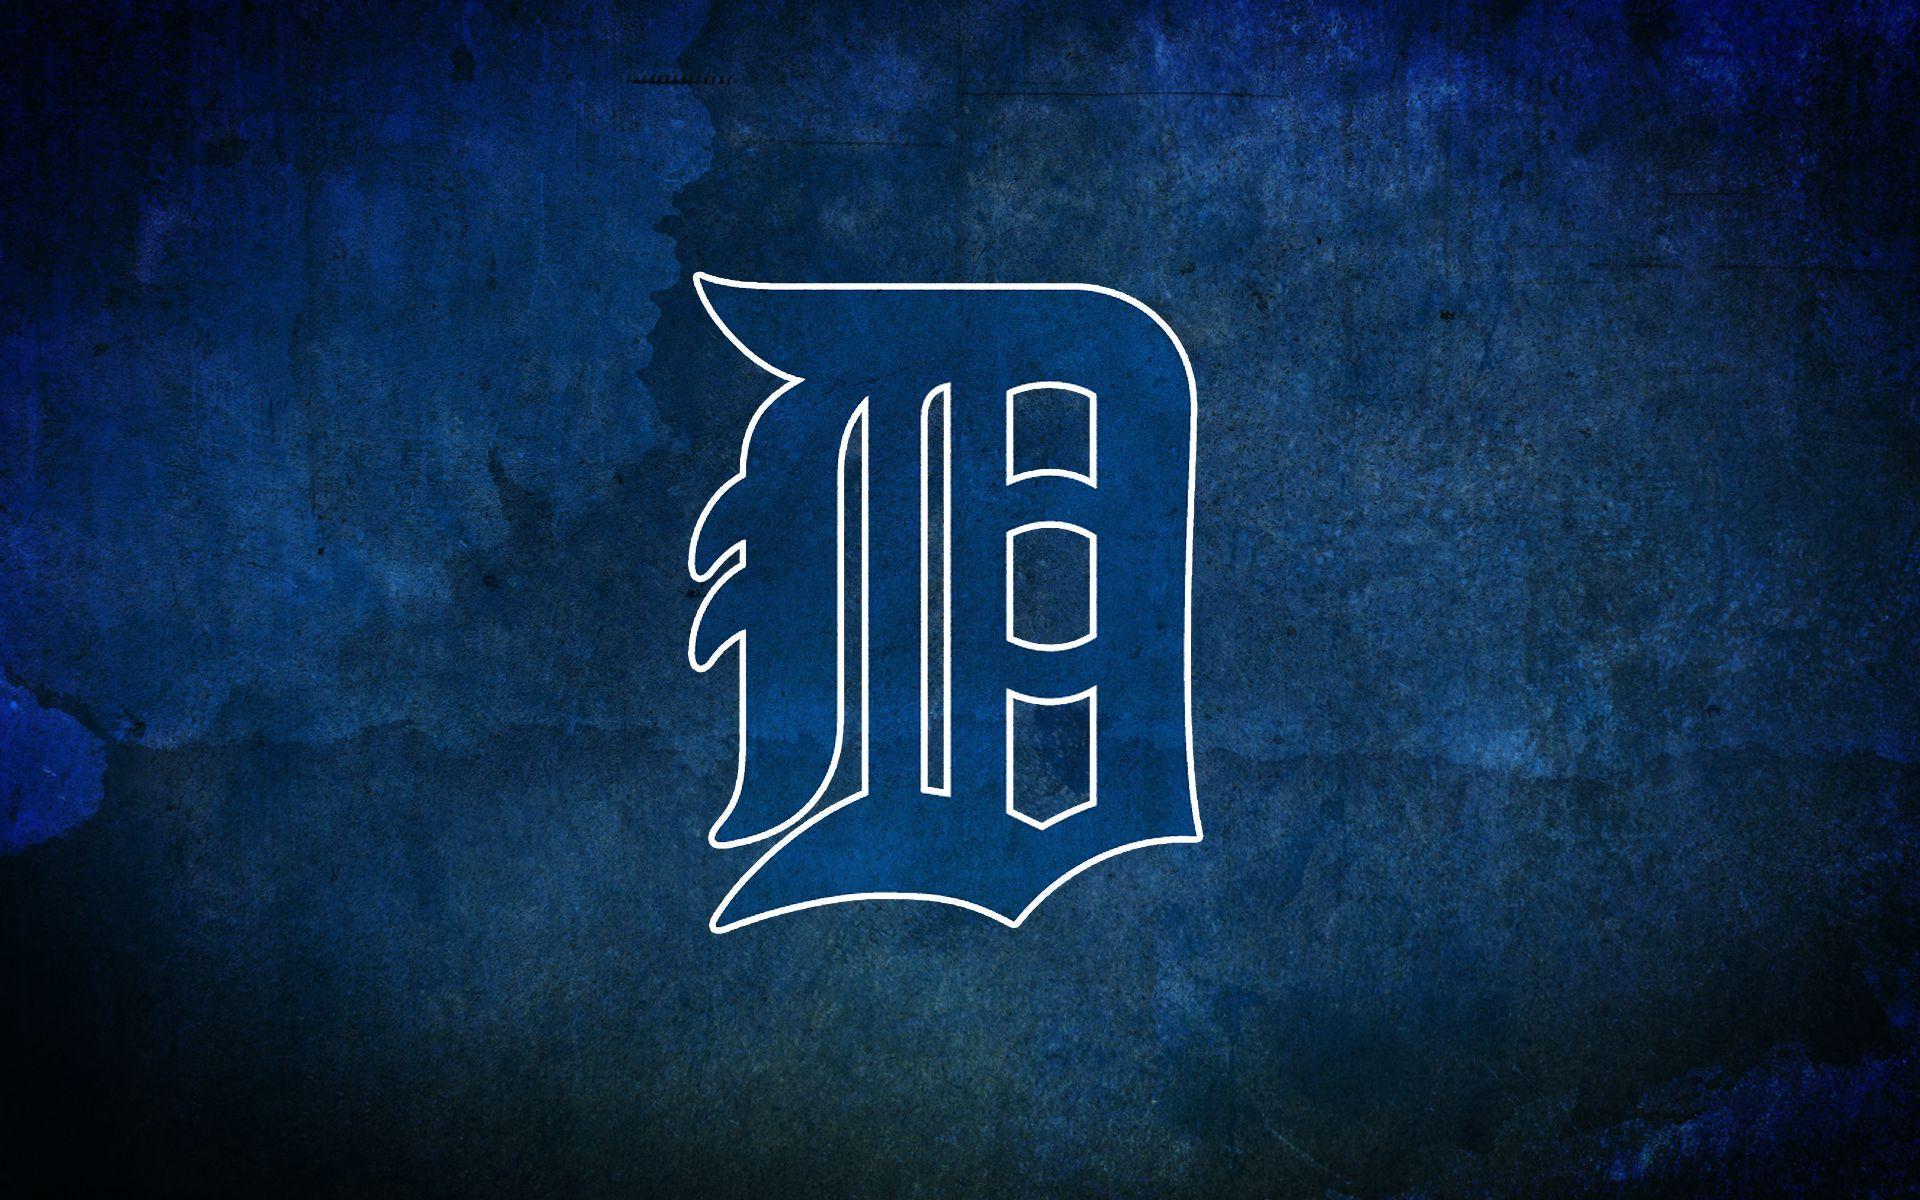 Cool Beat Logo - Detroit Tigers Cool Wallpaper 24857 Image. wallgraf. Birthday